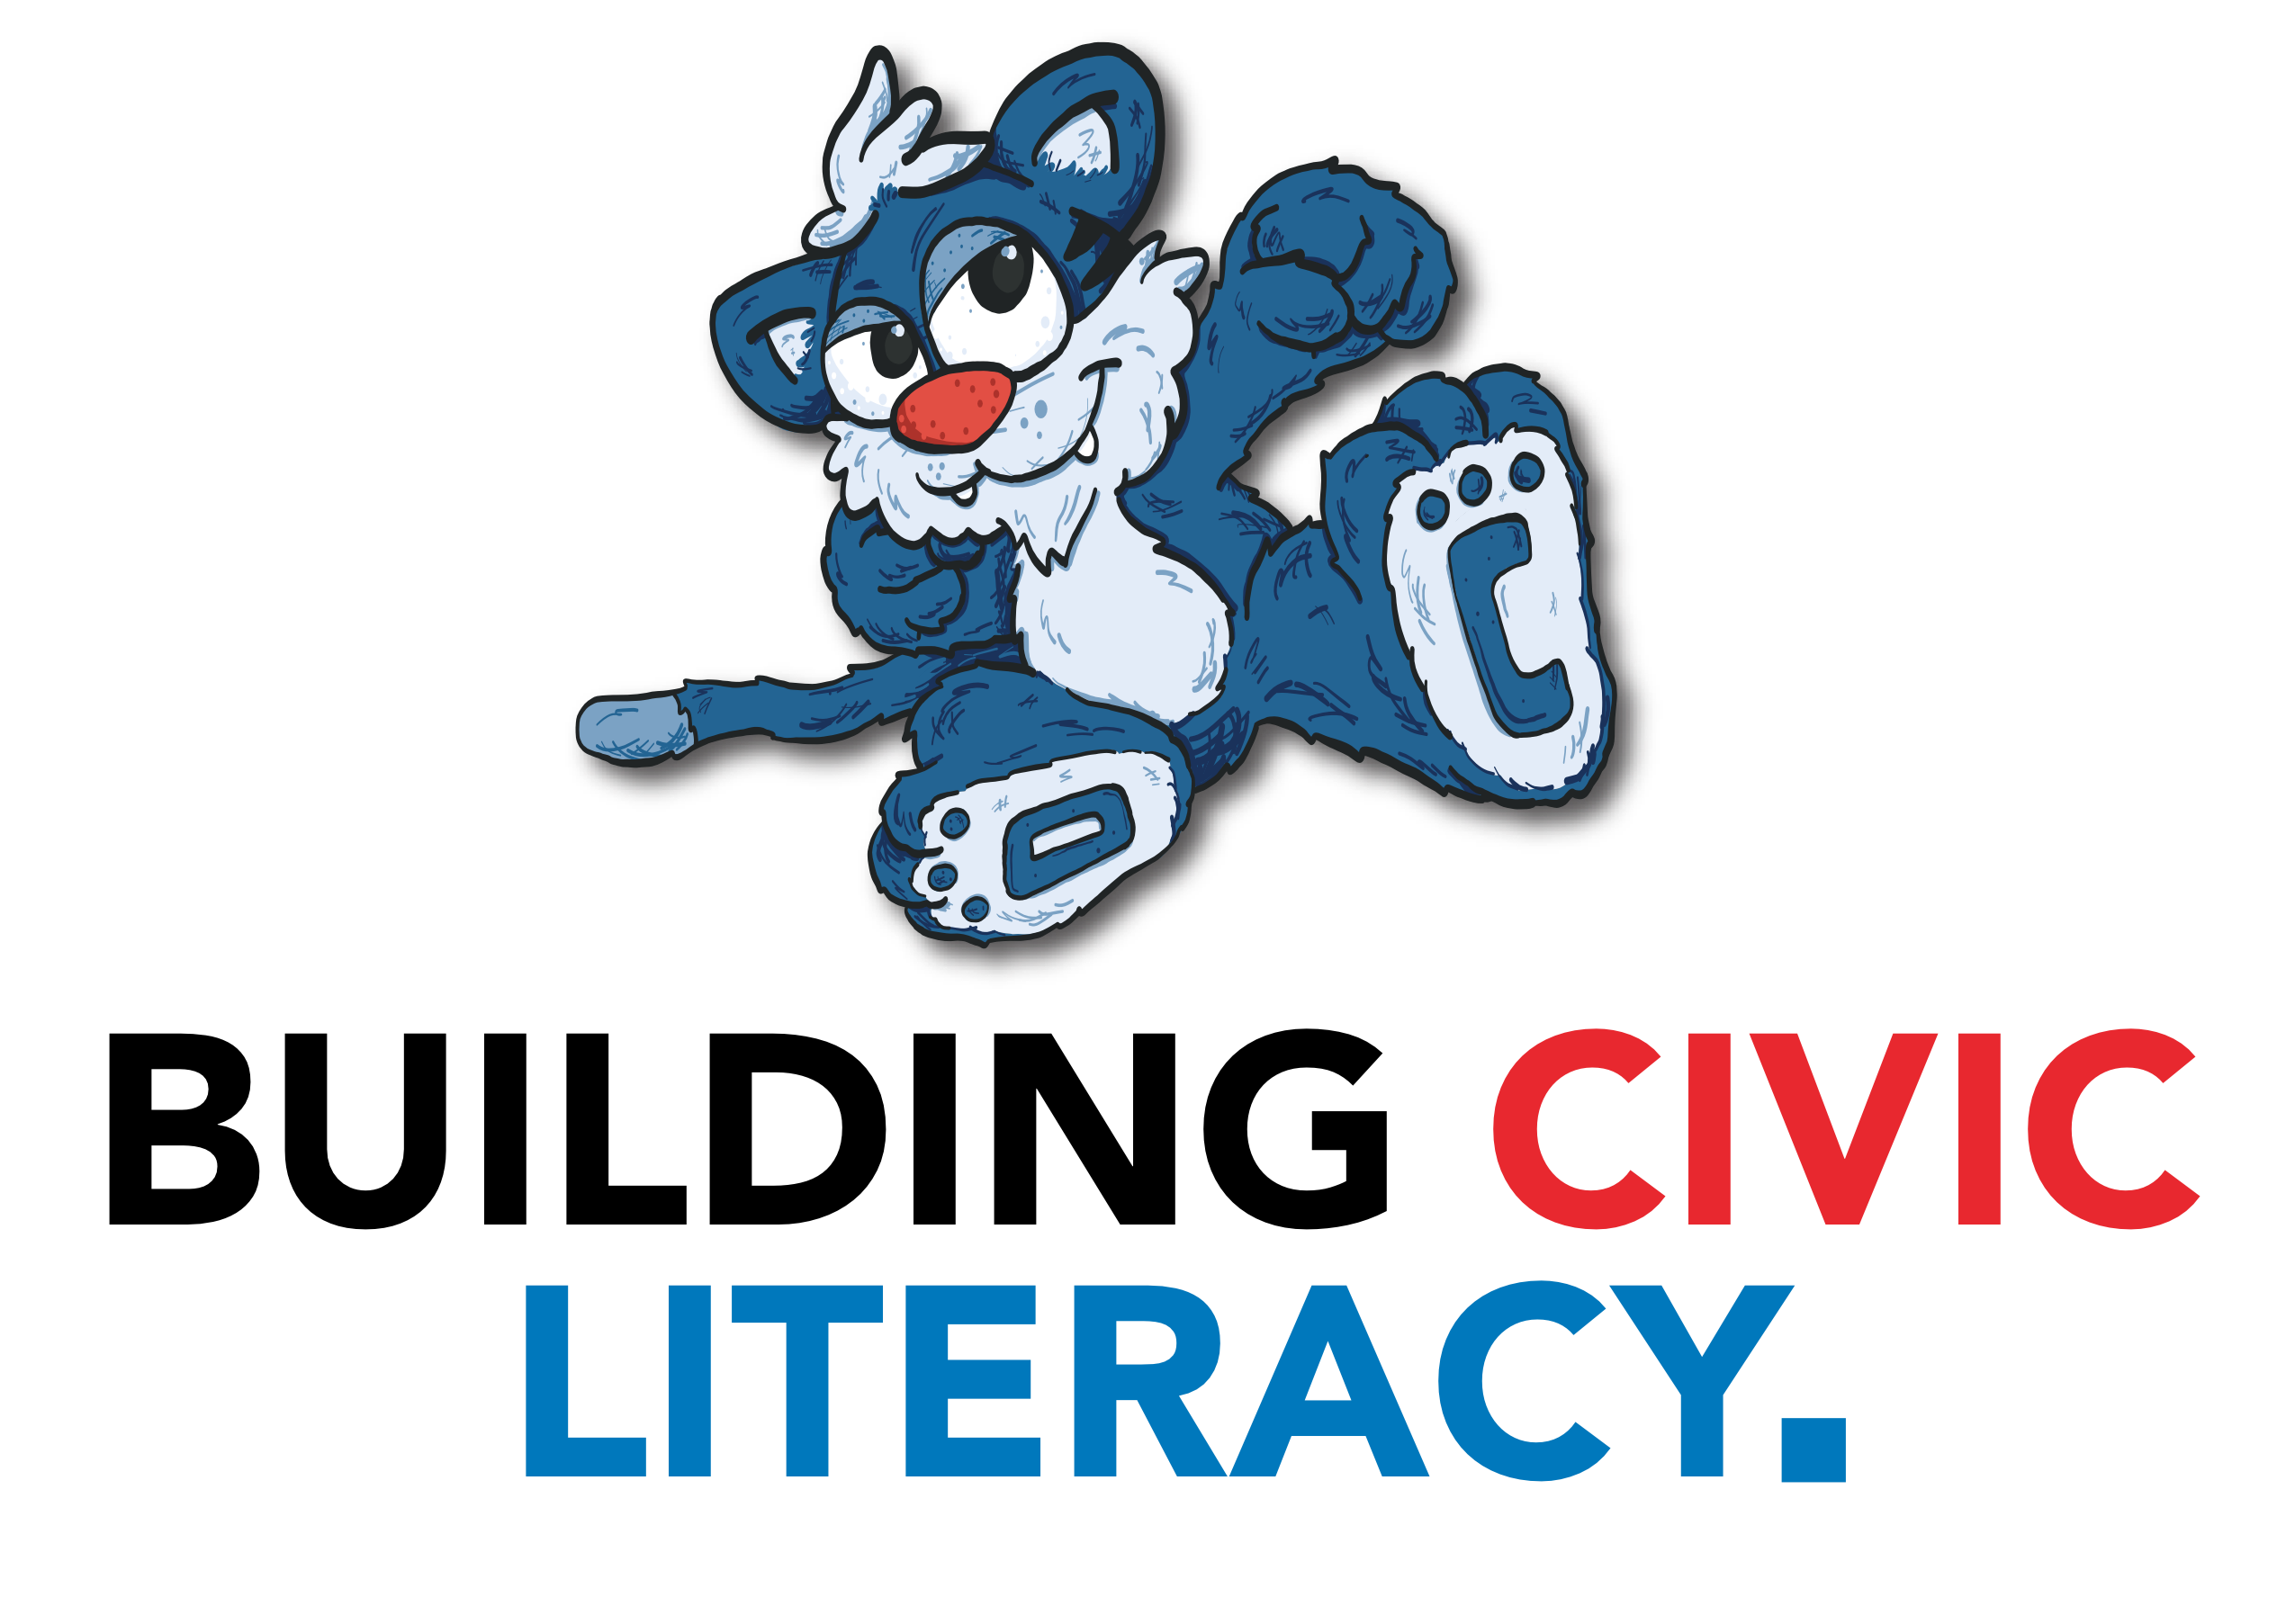 Building Civic Literacy